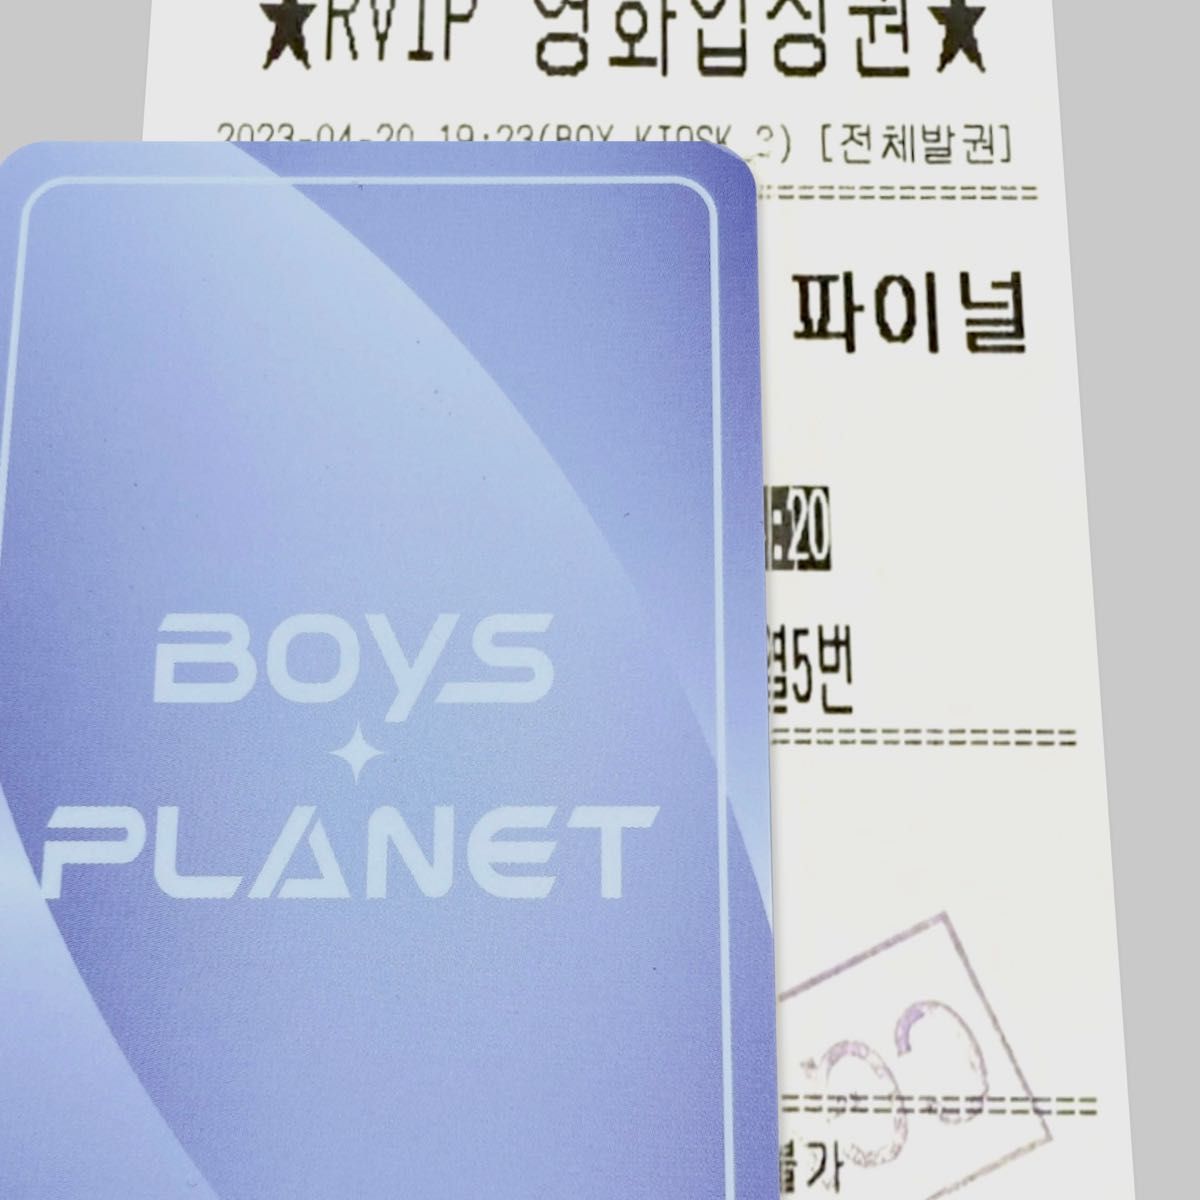 BOYSPLANET ボーイズプラネット ボイプラ cgv ファイナル 韓国 観覧者 